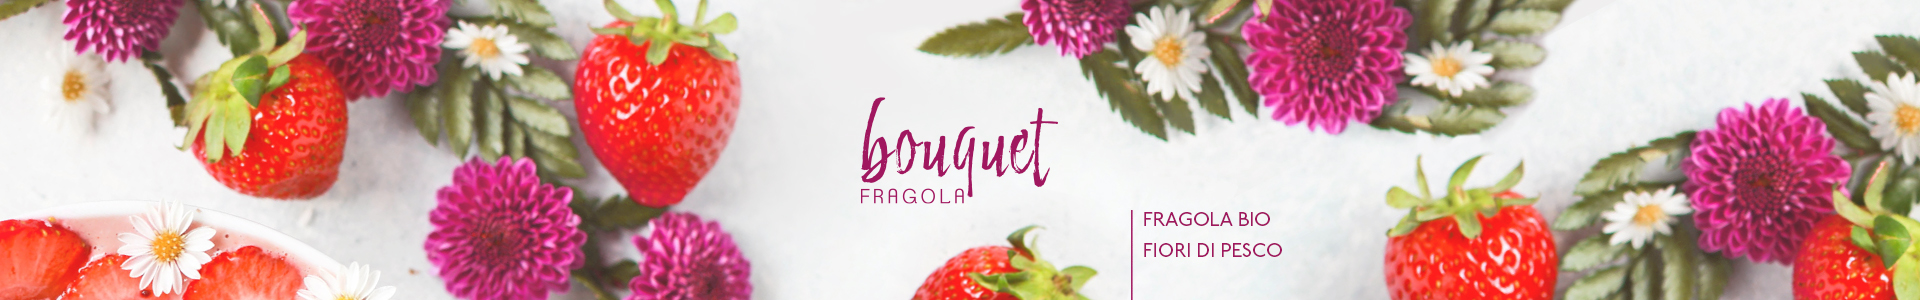 Bouquet-Fragola-1920x300-300822.jpg